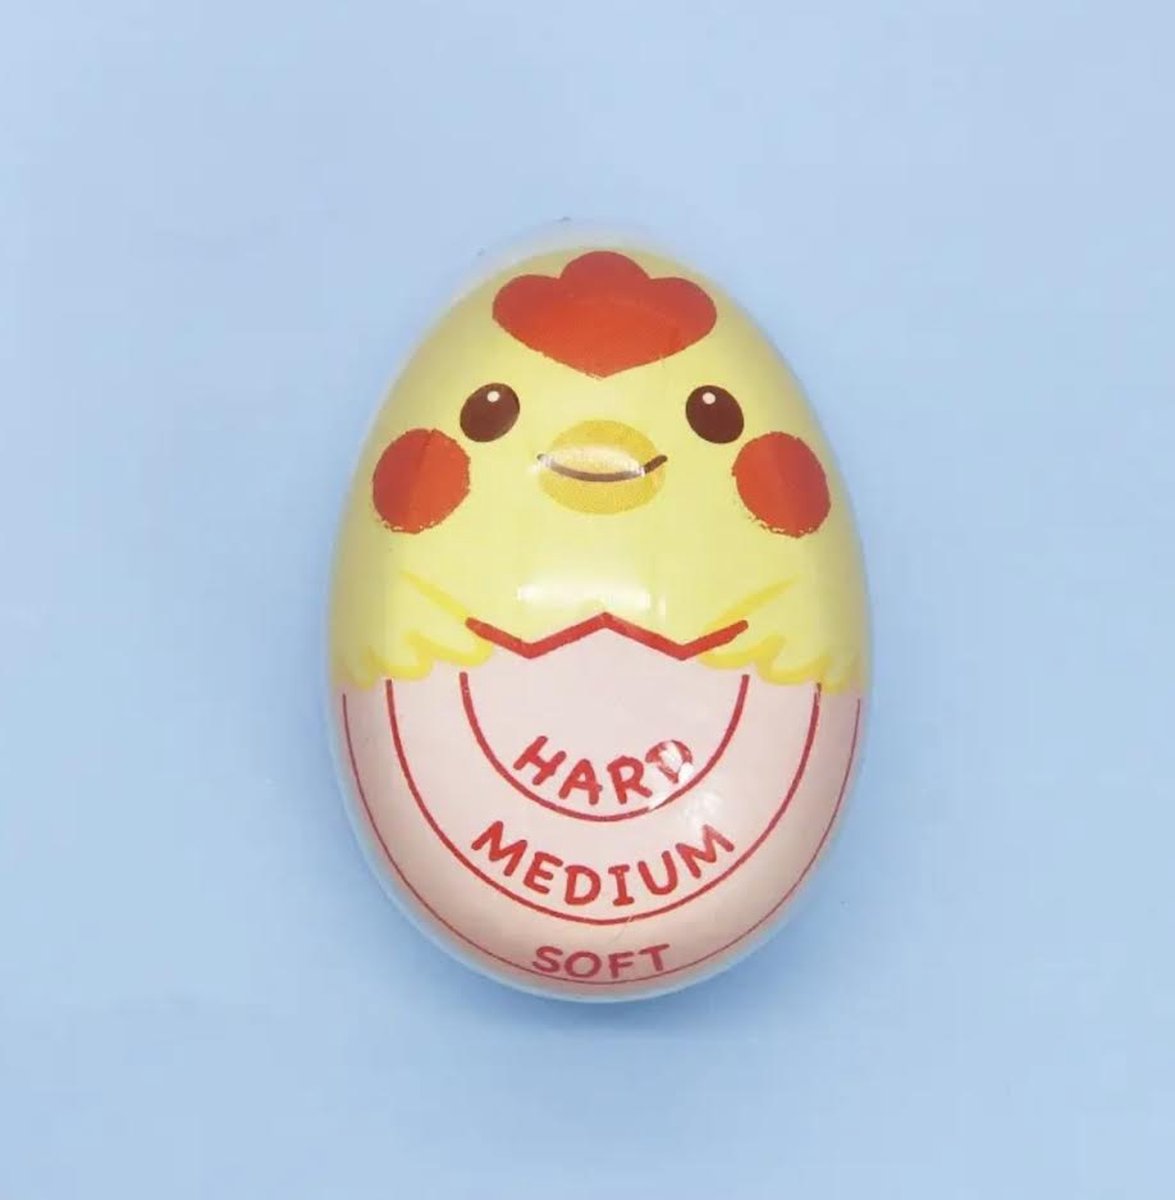 Ei kookwekker - Egg timer - Eierwekker - Eierkoker - Eiertimer - geel - roze - Timer universeel - Kookwekker ei - Wekker ei - gadget